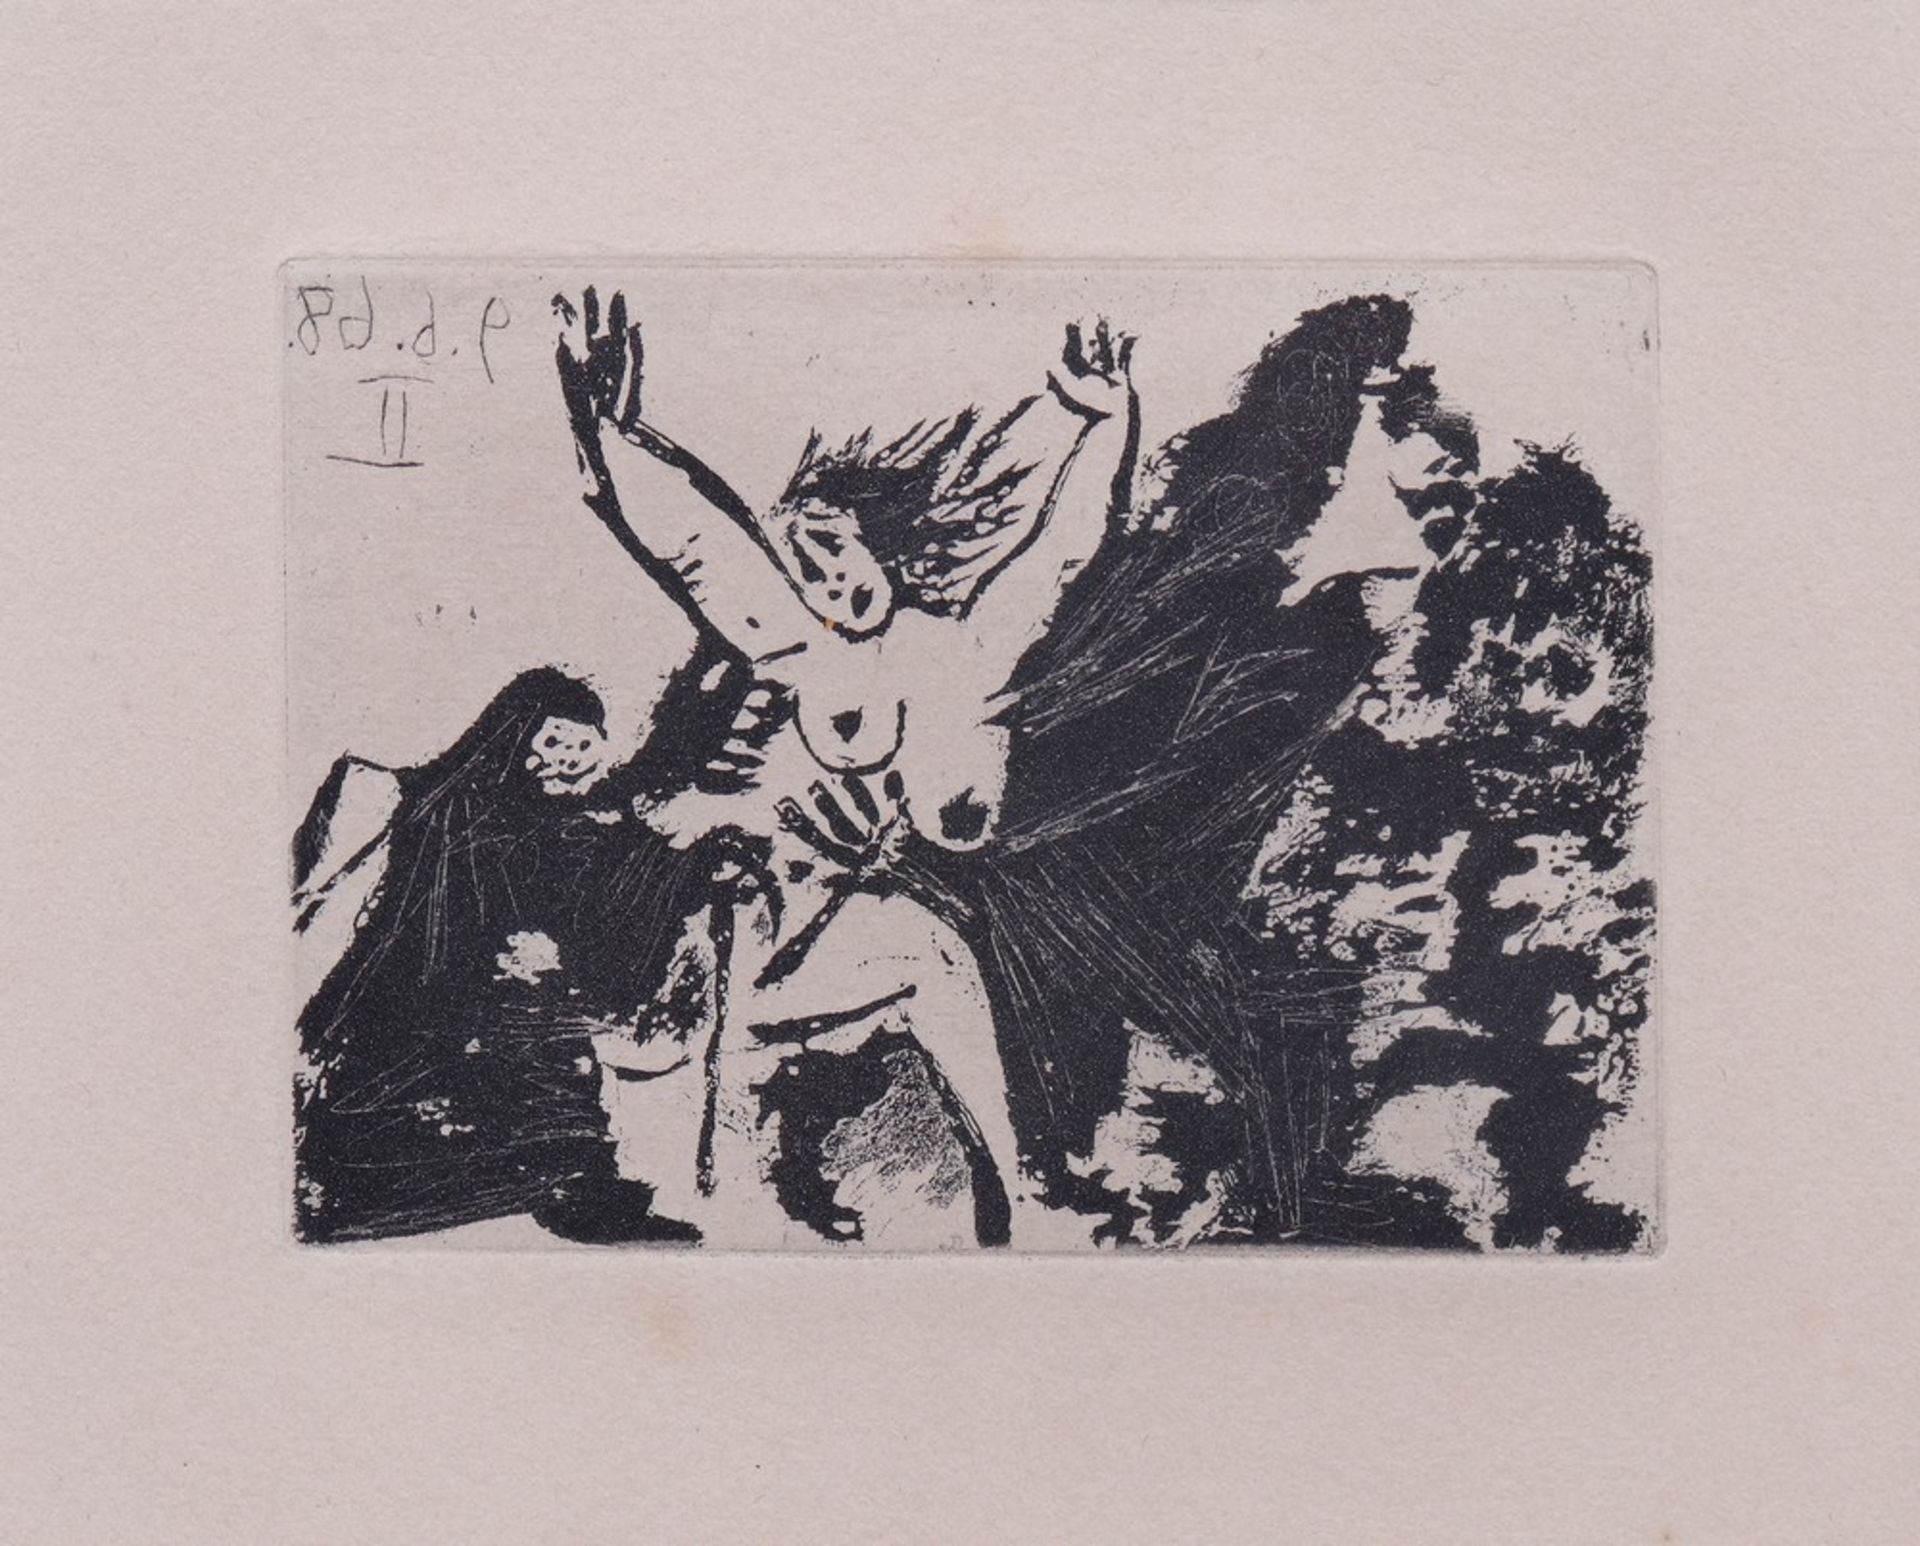 Pablo Ruiz Picasso (1881, Malaga, Spain - 1973, Mougins, France) - Image 6 of 6